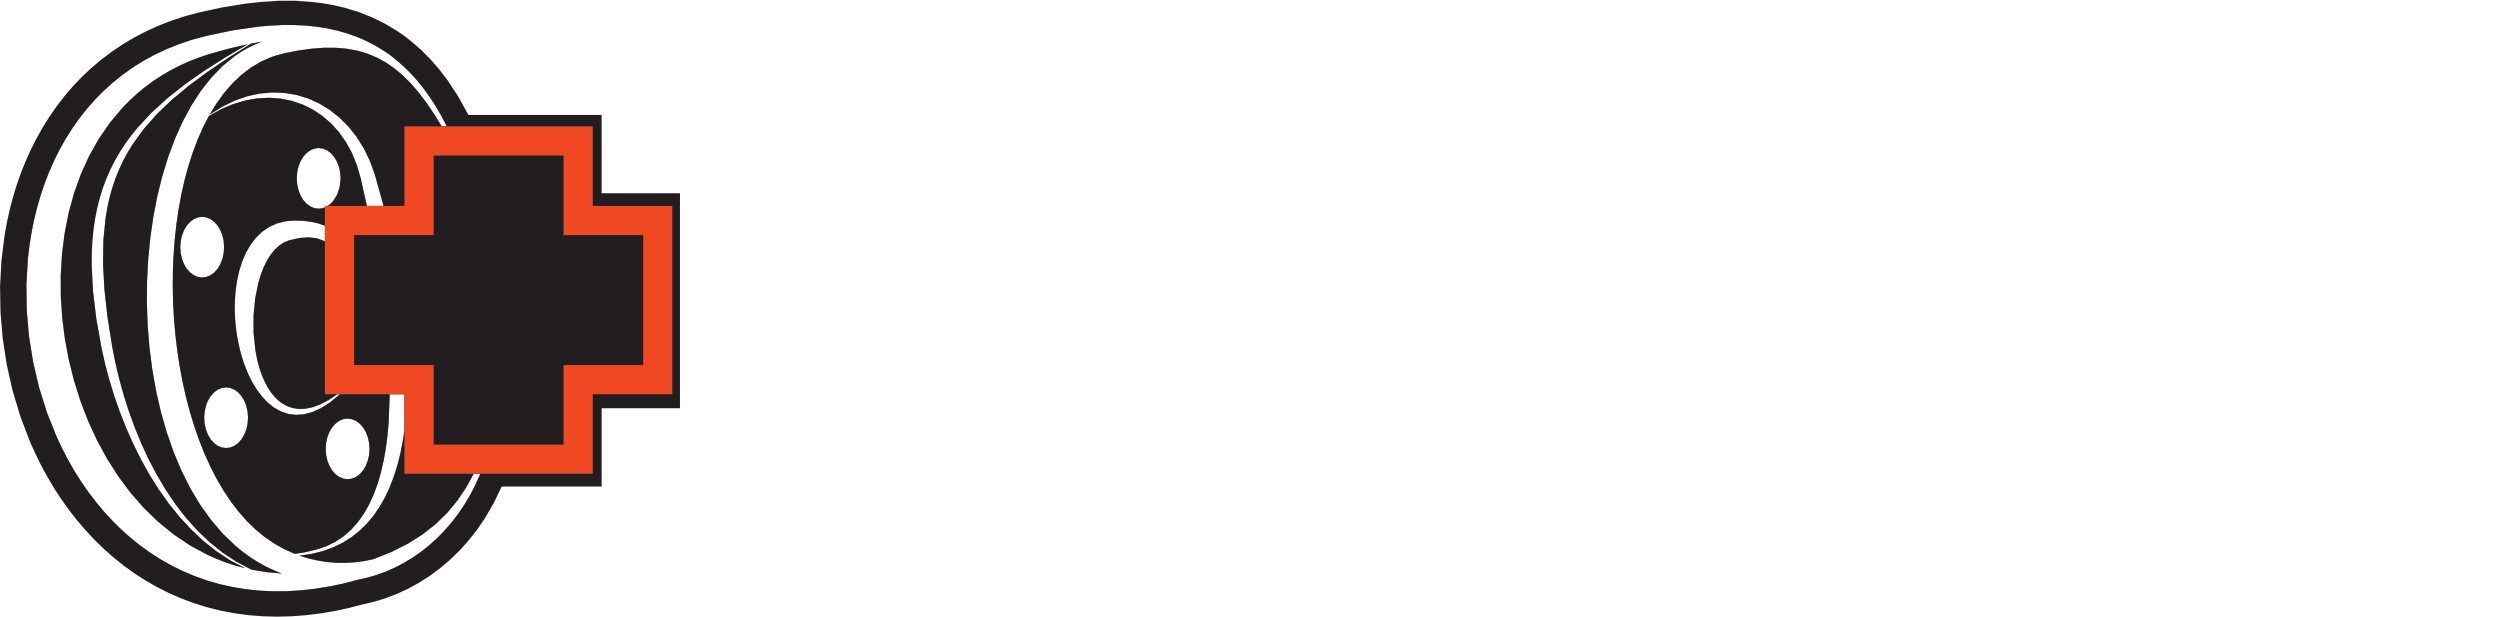 Rim Doctor logo